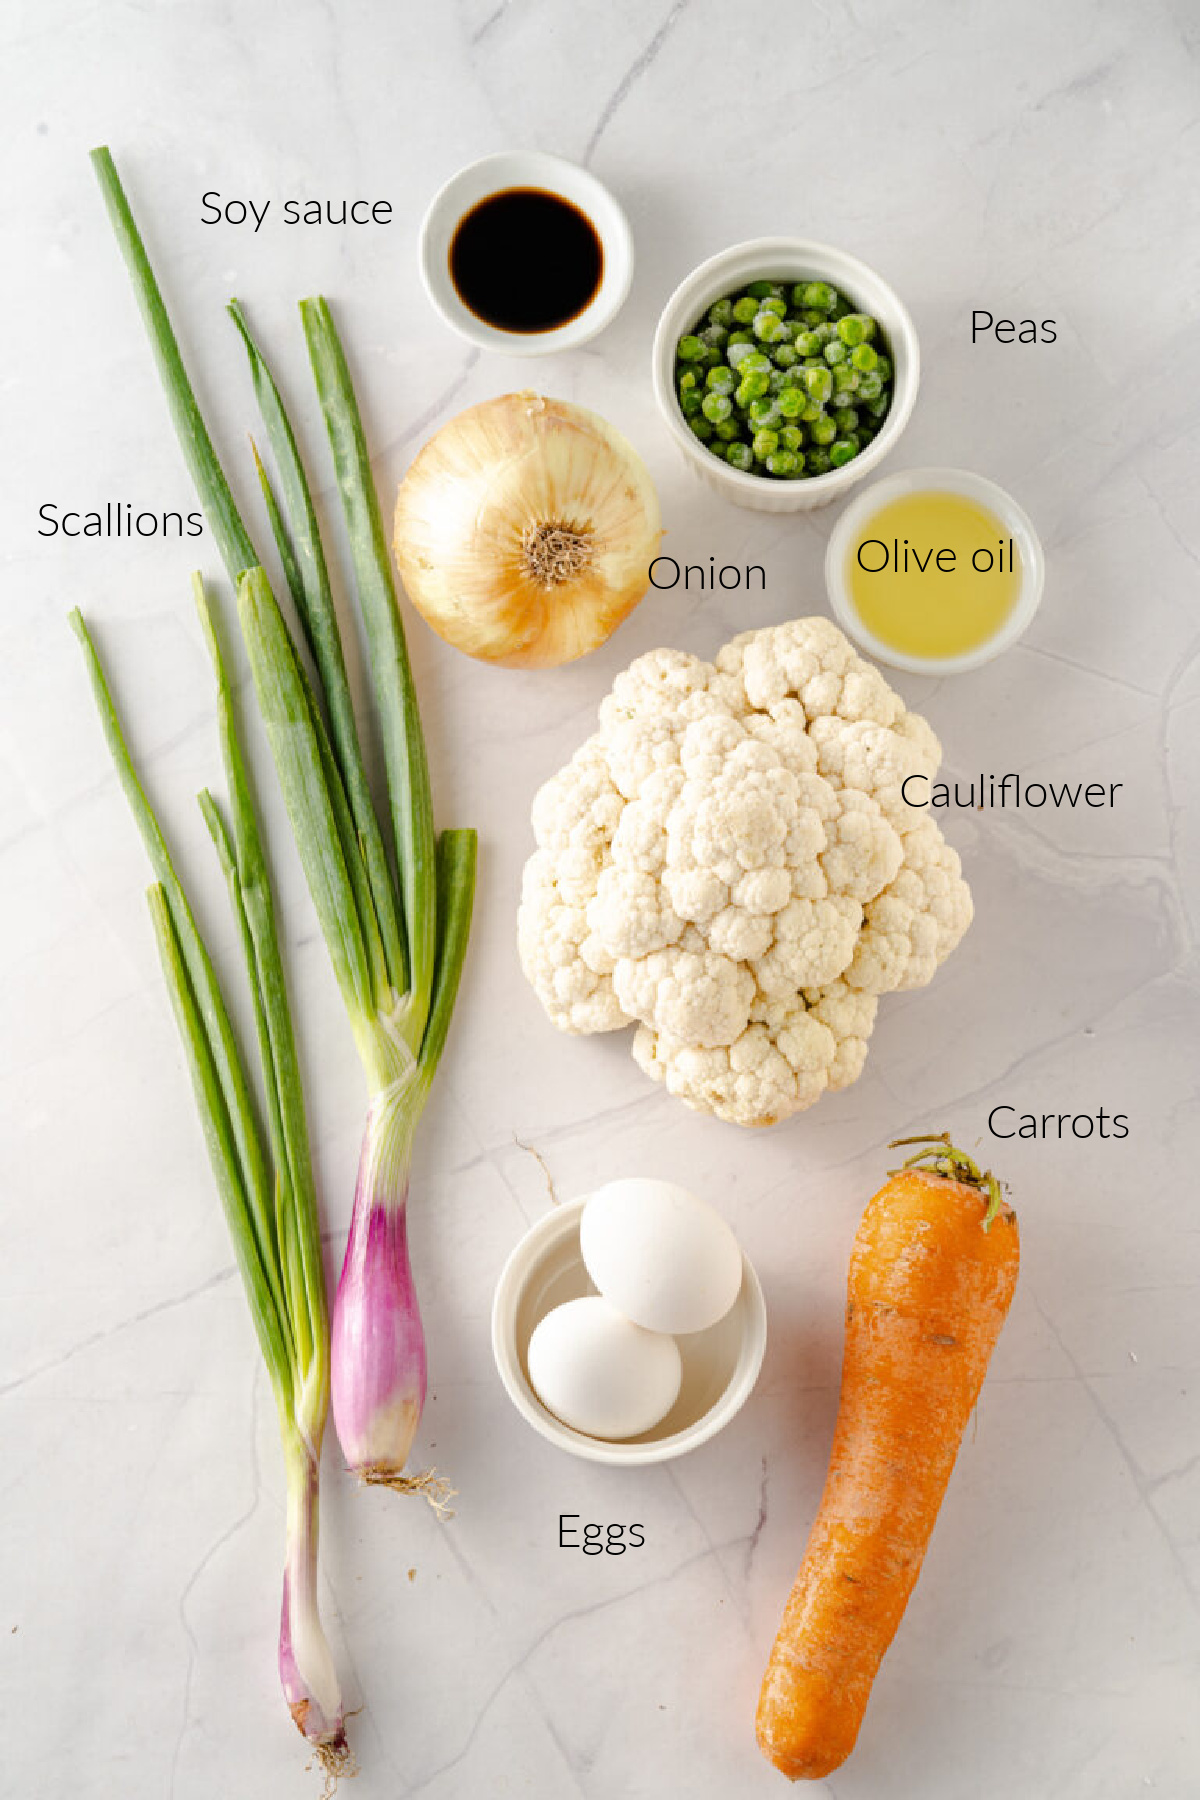 Ingredients to make homemade Cauliflower Fried Rice recipe